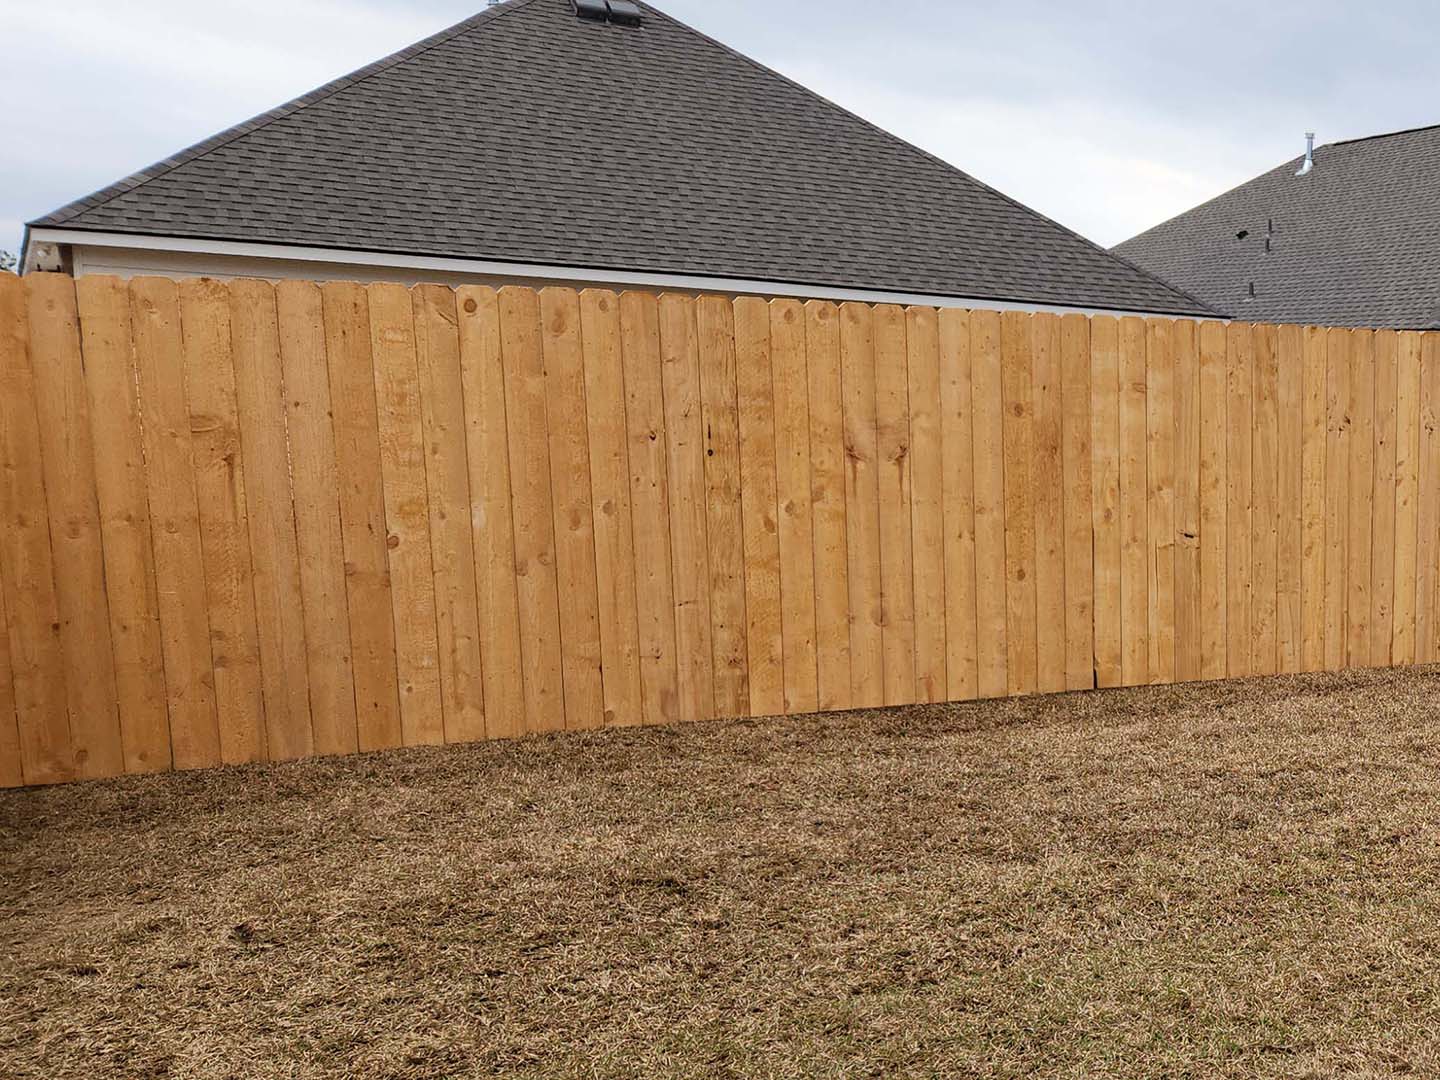 Wood stockade fence contractor in Slidell Louisiana